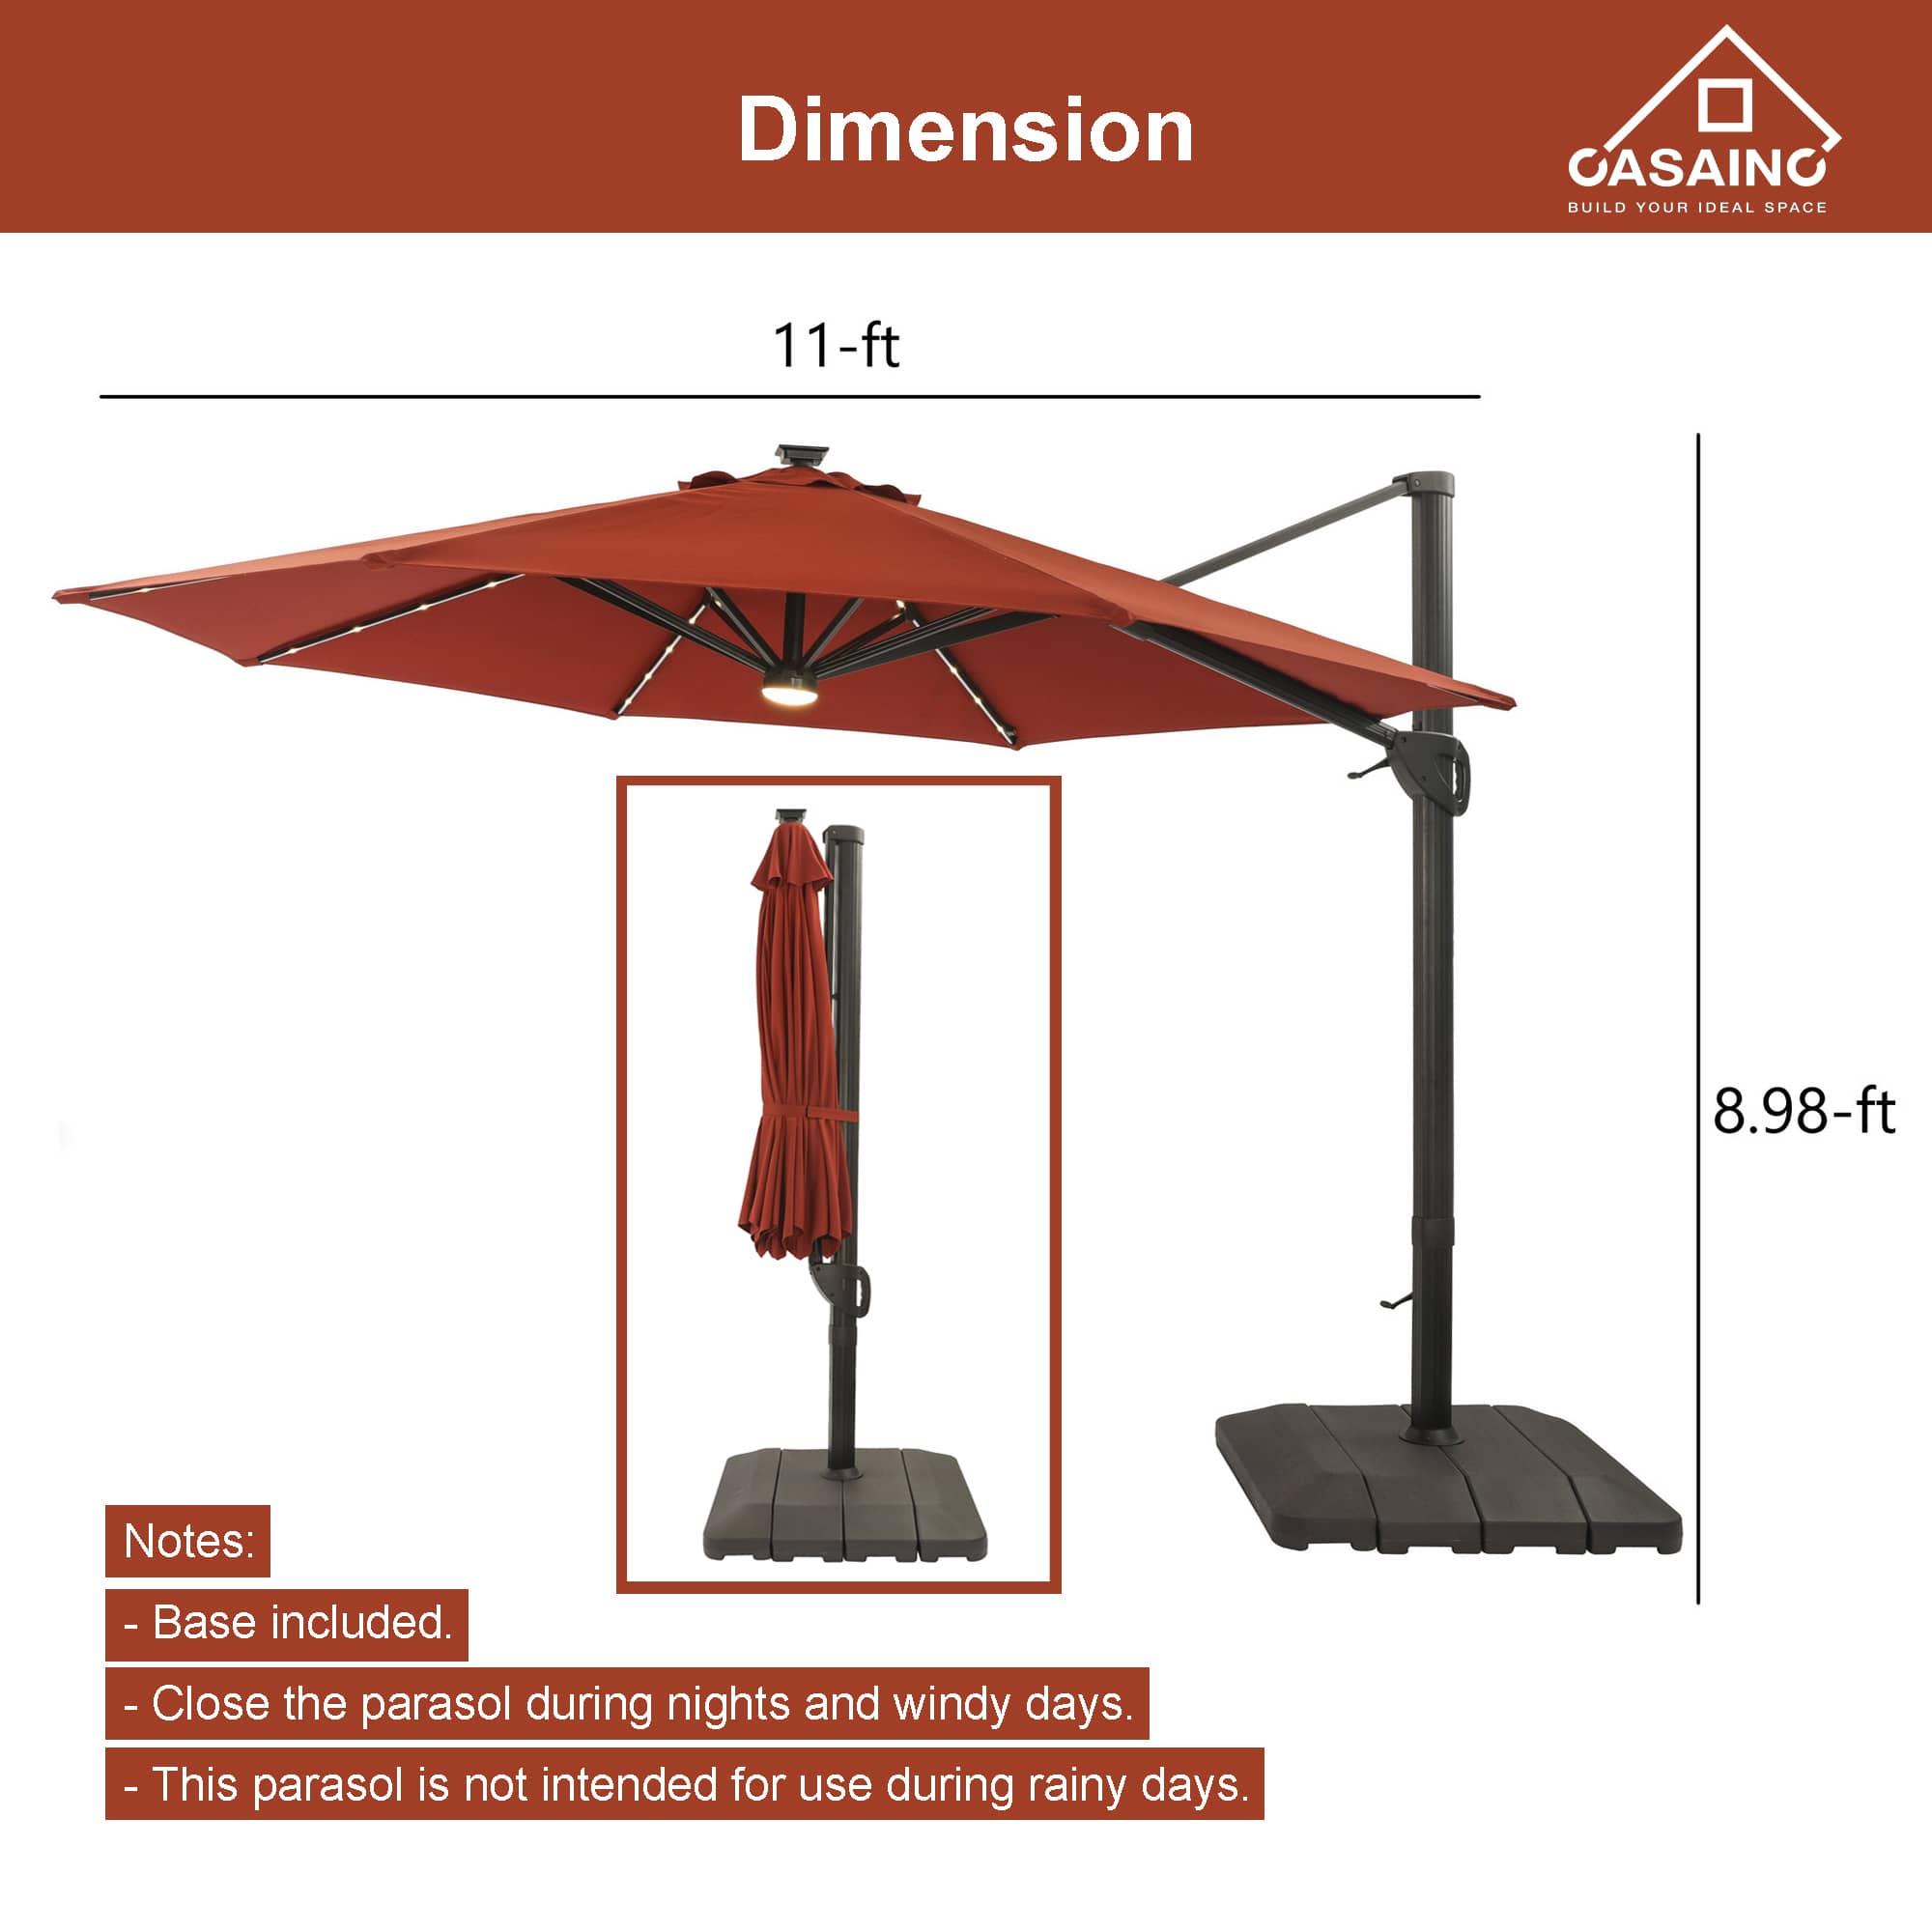 11 ft. Illuminated Patio Umbrella with Base Dimensions